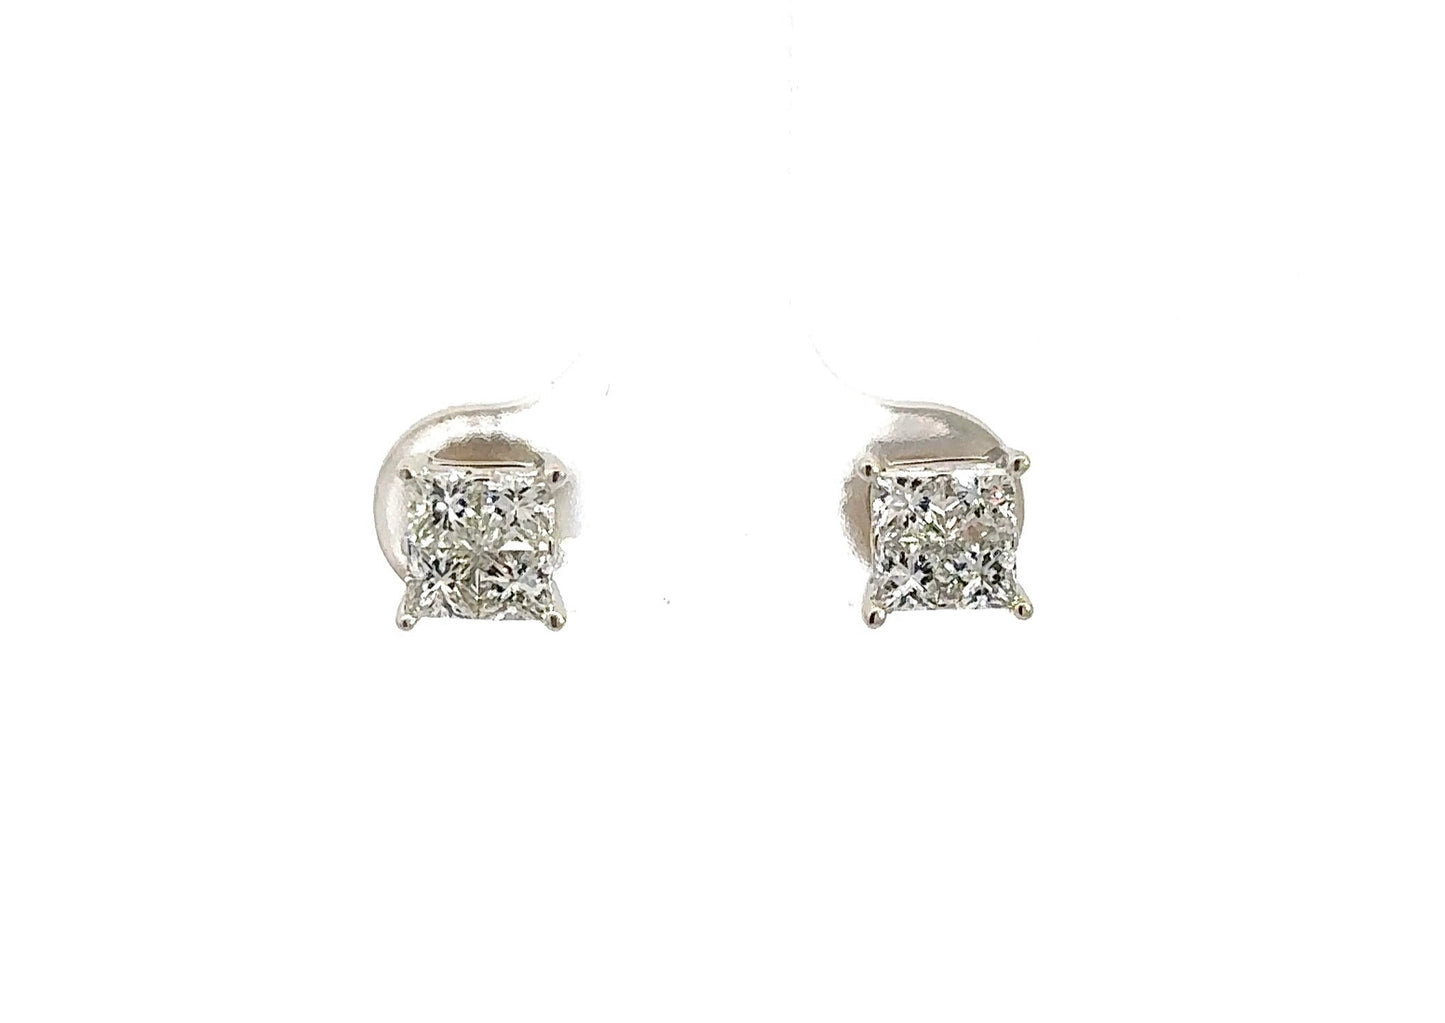 Front of diamond earrings with 4 princess-cut diamonds in each earring.